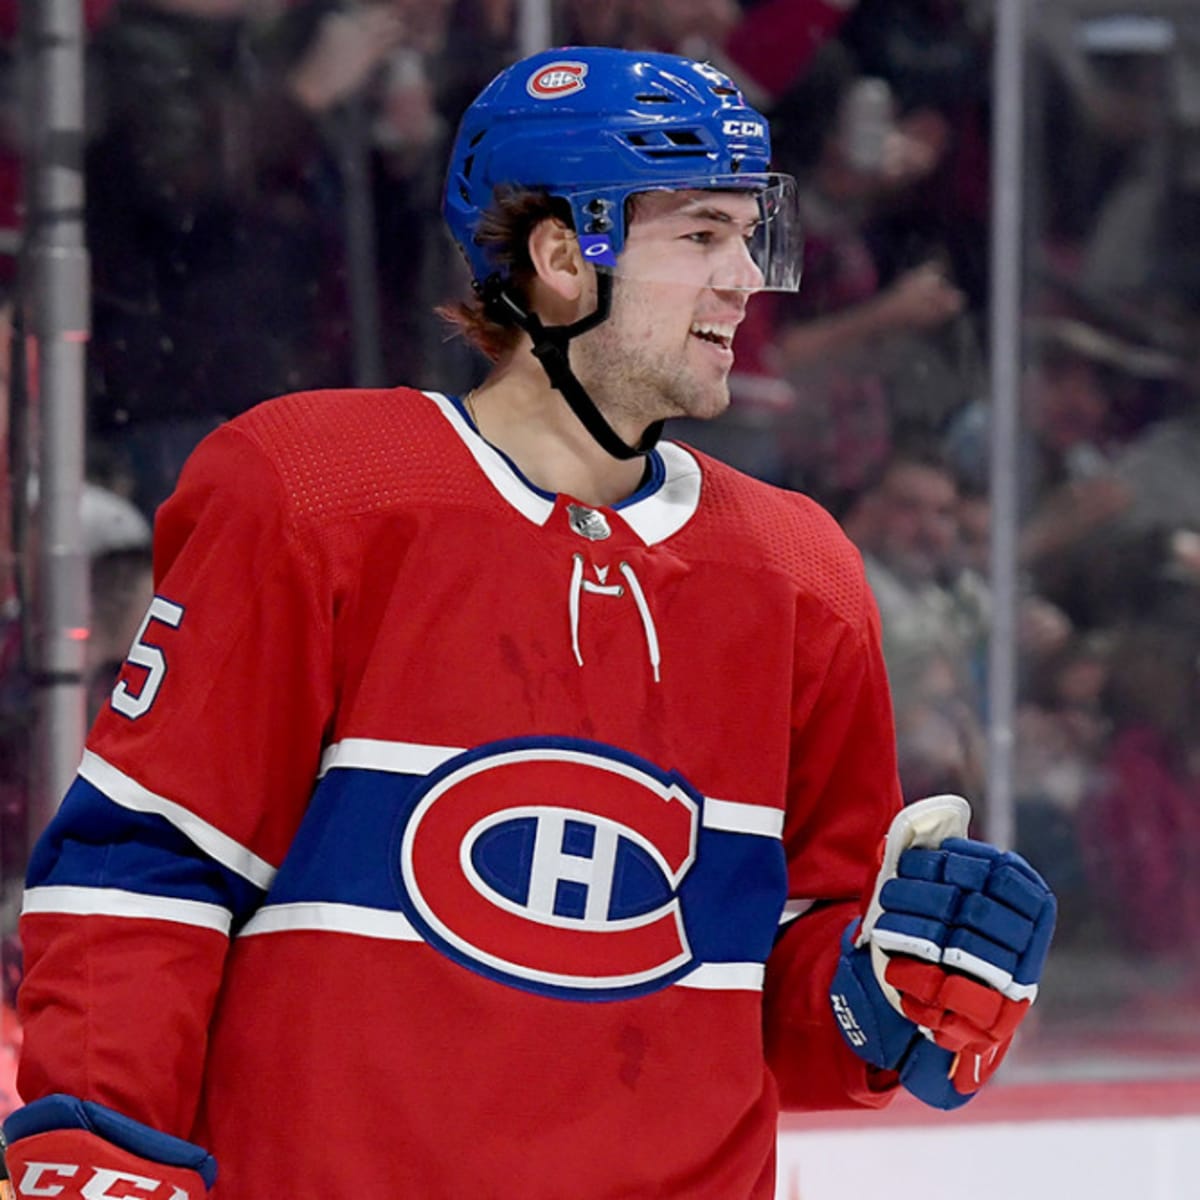 Max Domi scores in OT, Canadiens beat Flames 4-3